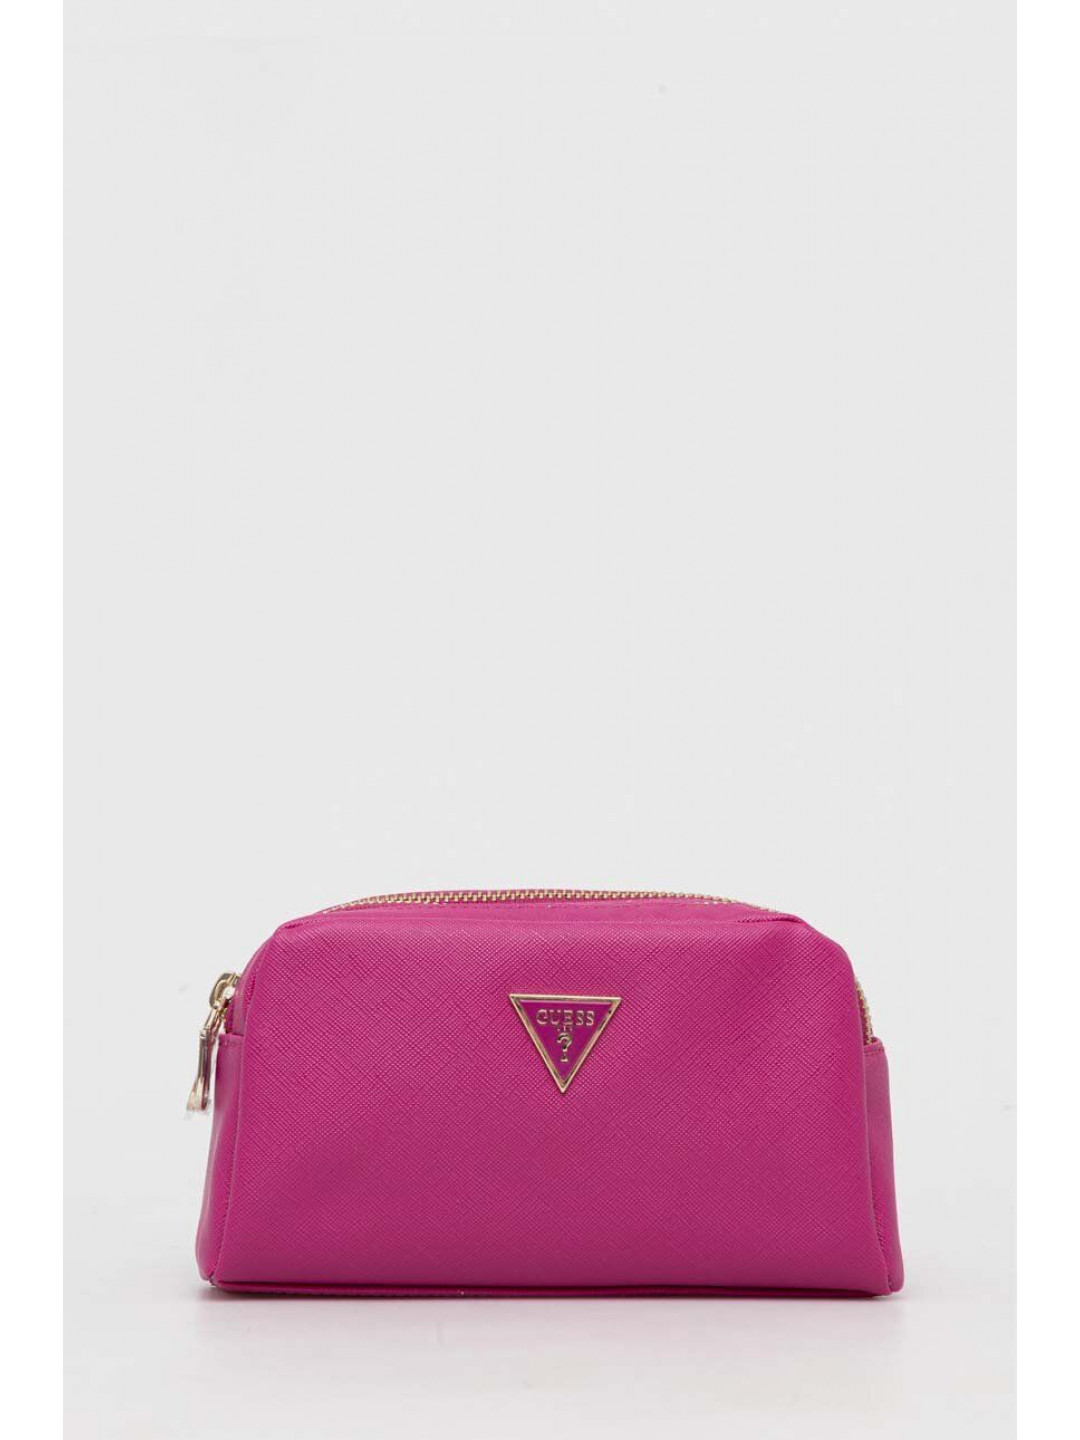 Kosmetická taška Guess růžová barva PW1576 P3373